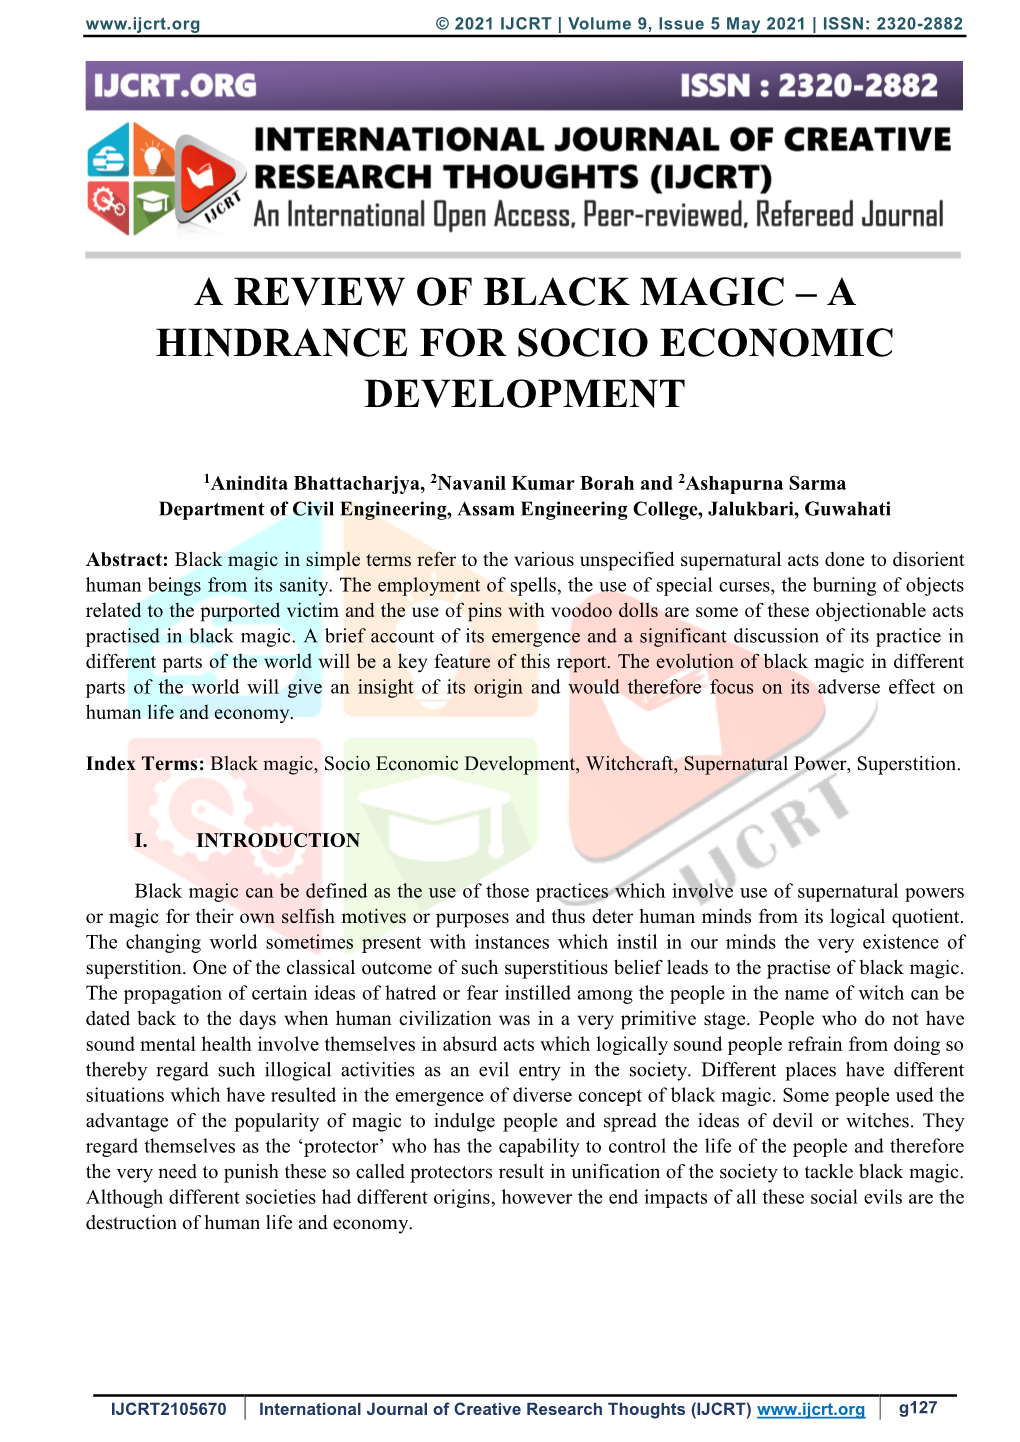 A Review of Black Magic – a Hindrance for Socio Economic Development